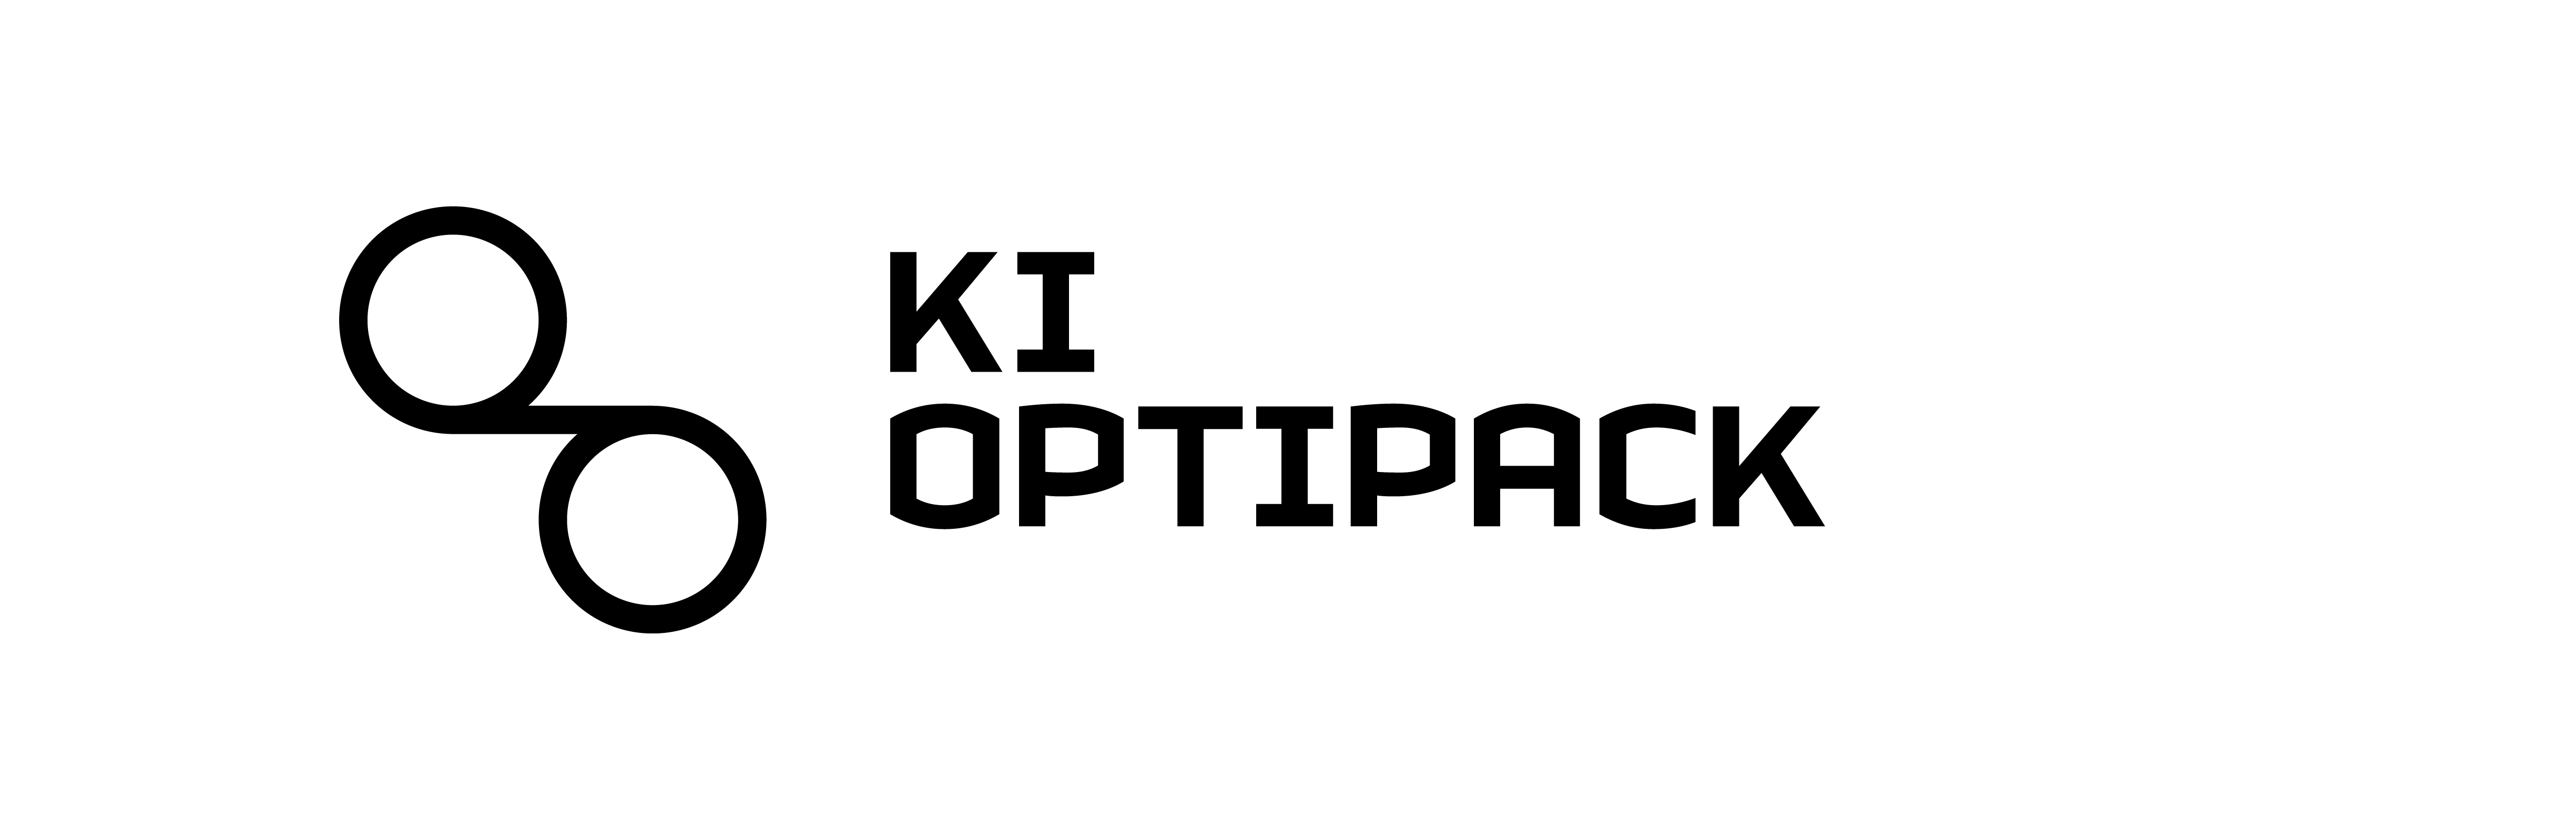 Logo KI Optipack